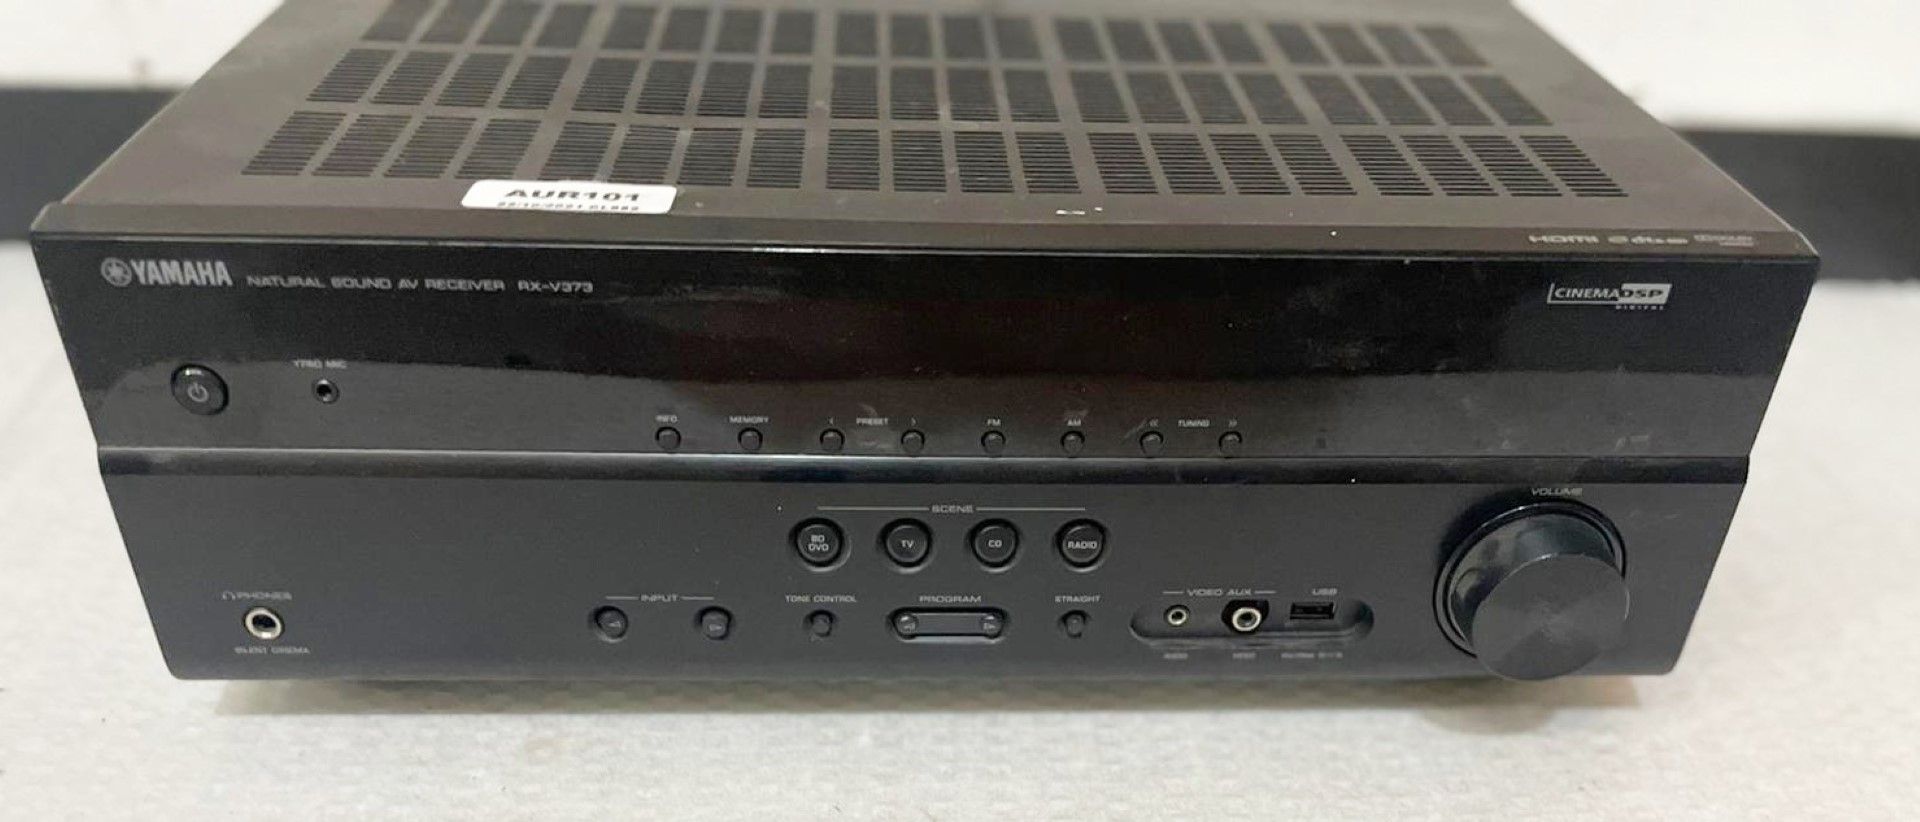 1 x Yamaha Natural Sound AV Reciever - Model RX-V3673 - Cinema DSP Digital - Original RRP: £700.00 - - Image 3 of 7